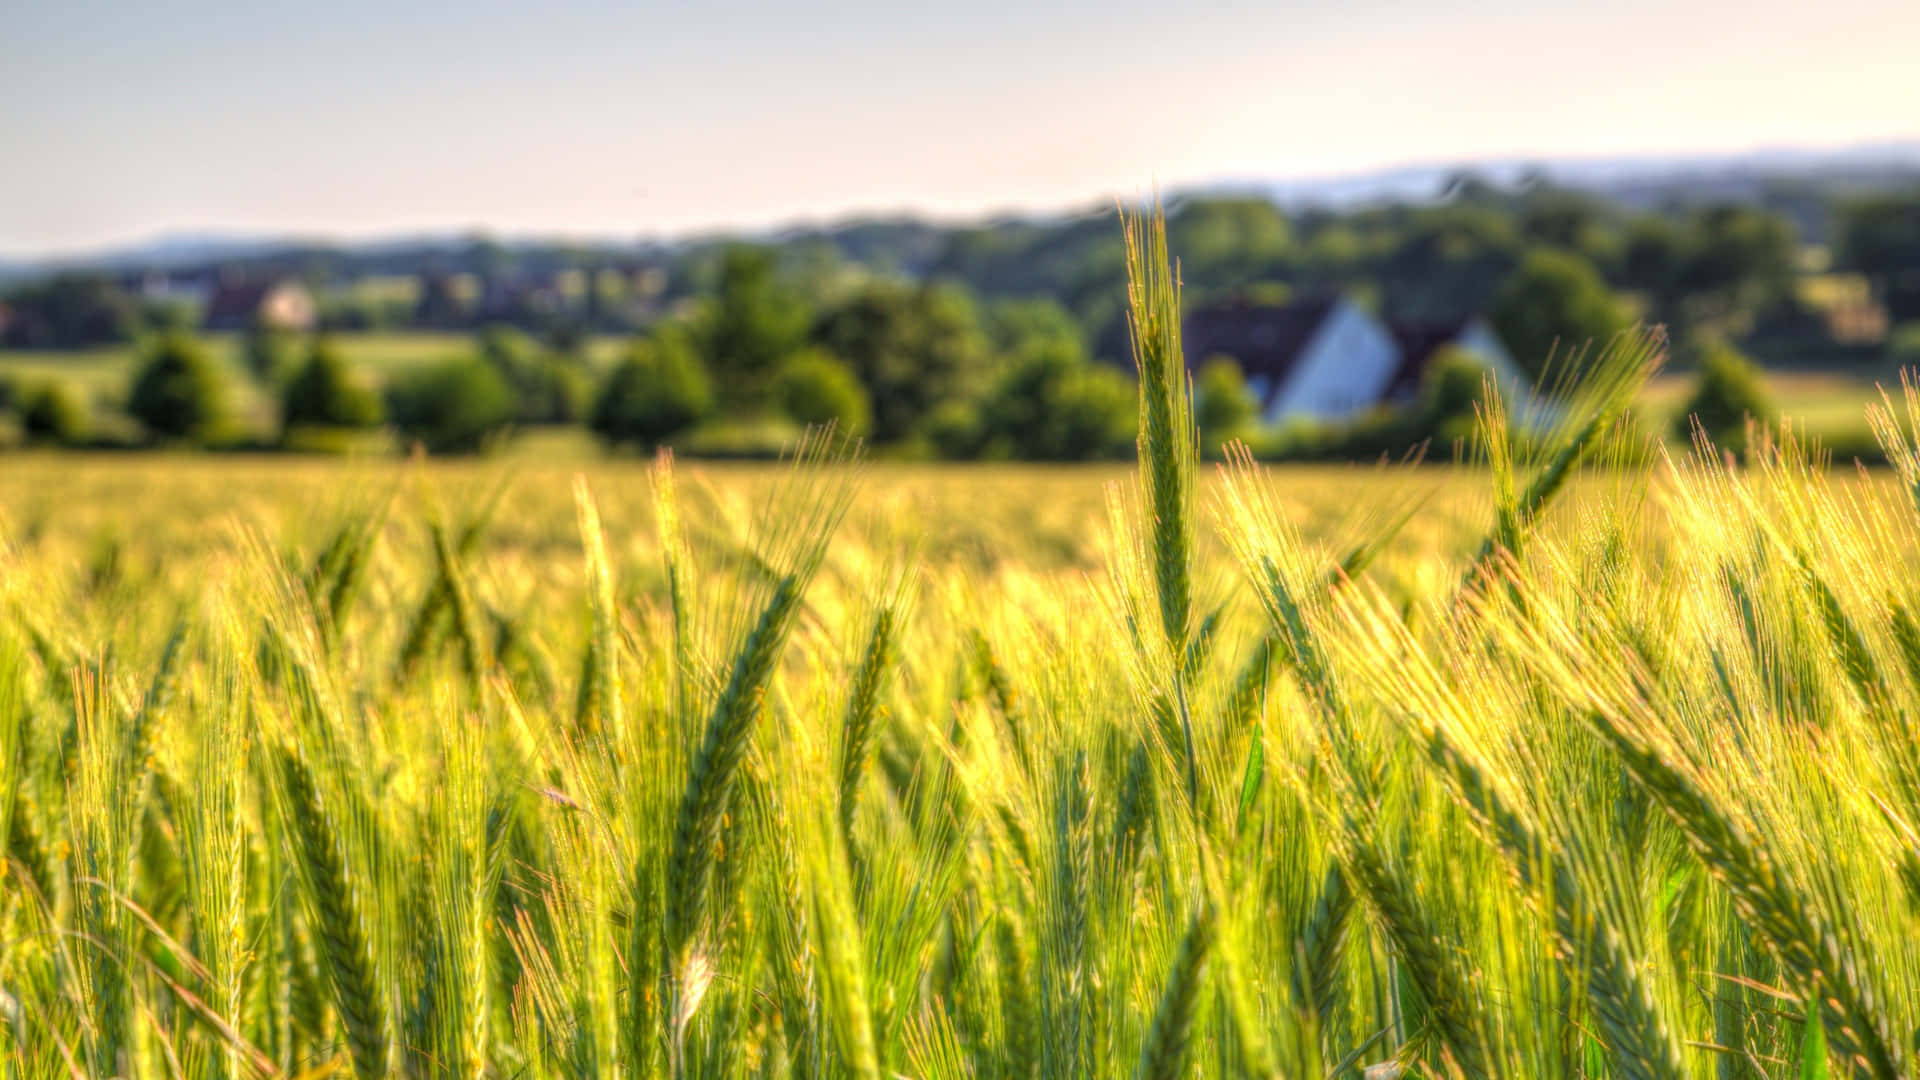 Warm, golden wheat fields in a beautiful summer day.